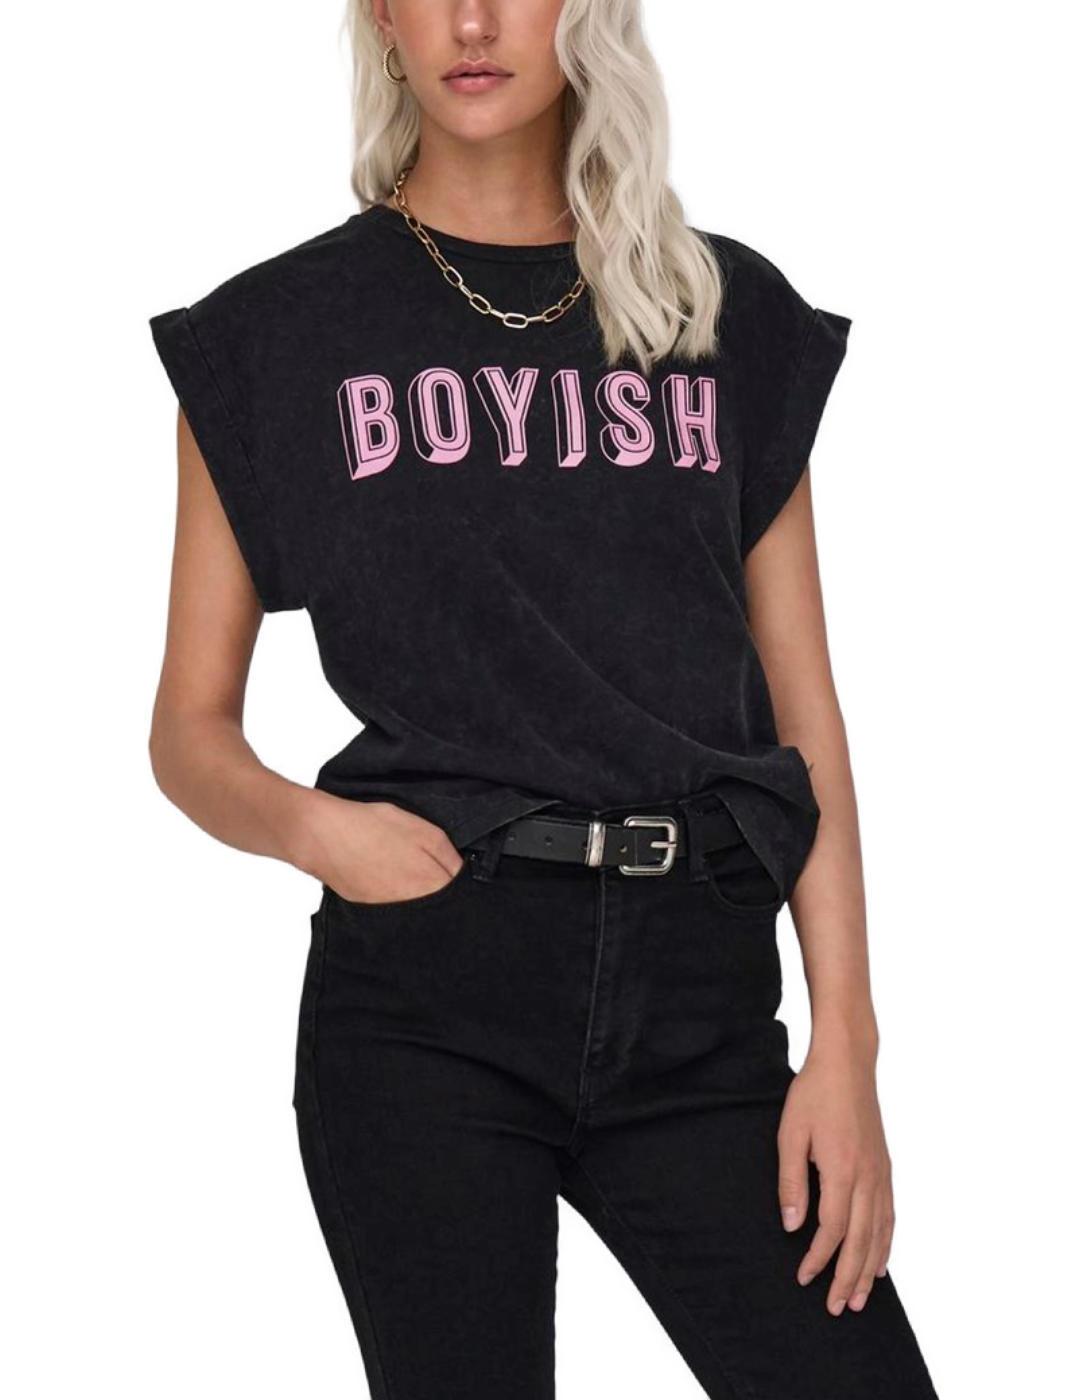 Camiseta Only Dahlia negro Boyish manga sisa para mujer